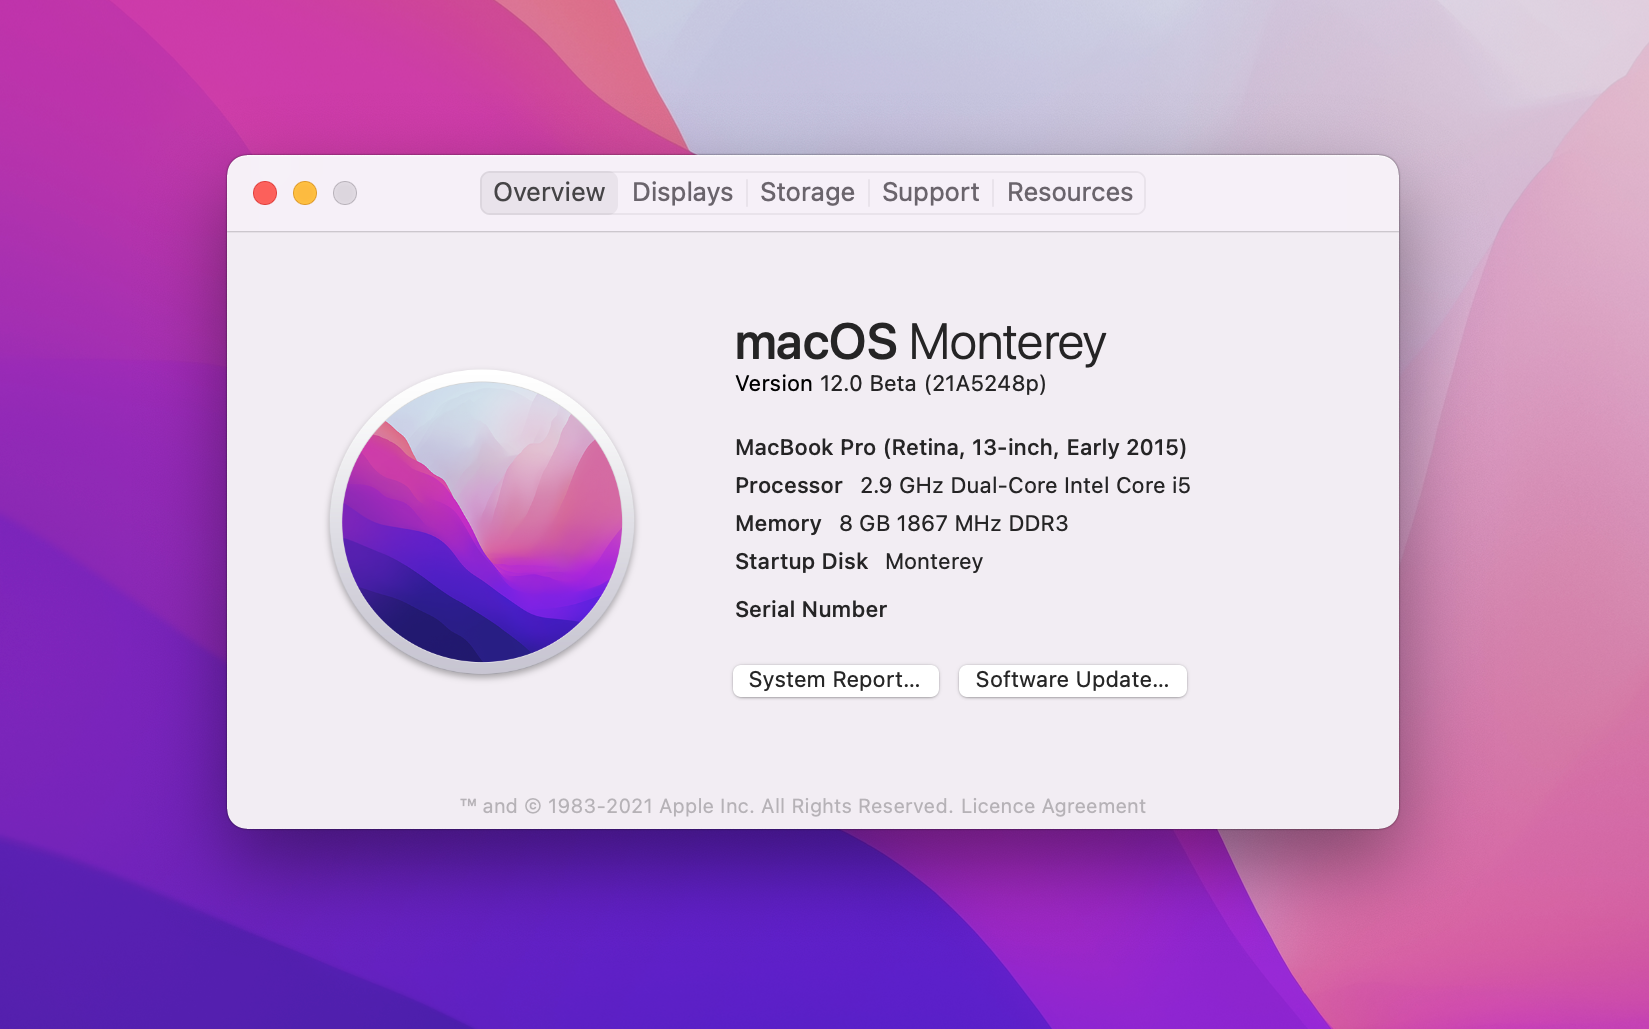 macOS Monterey running on an Intel Mac